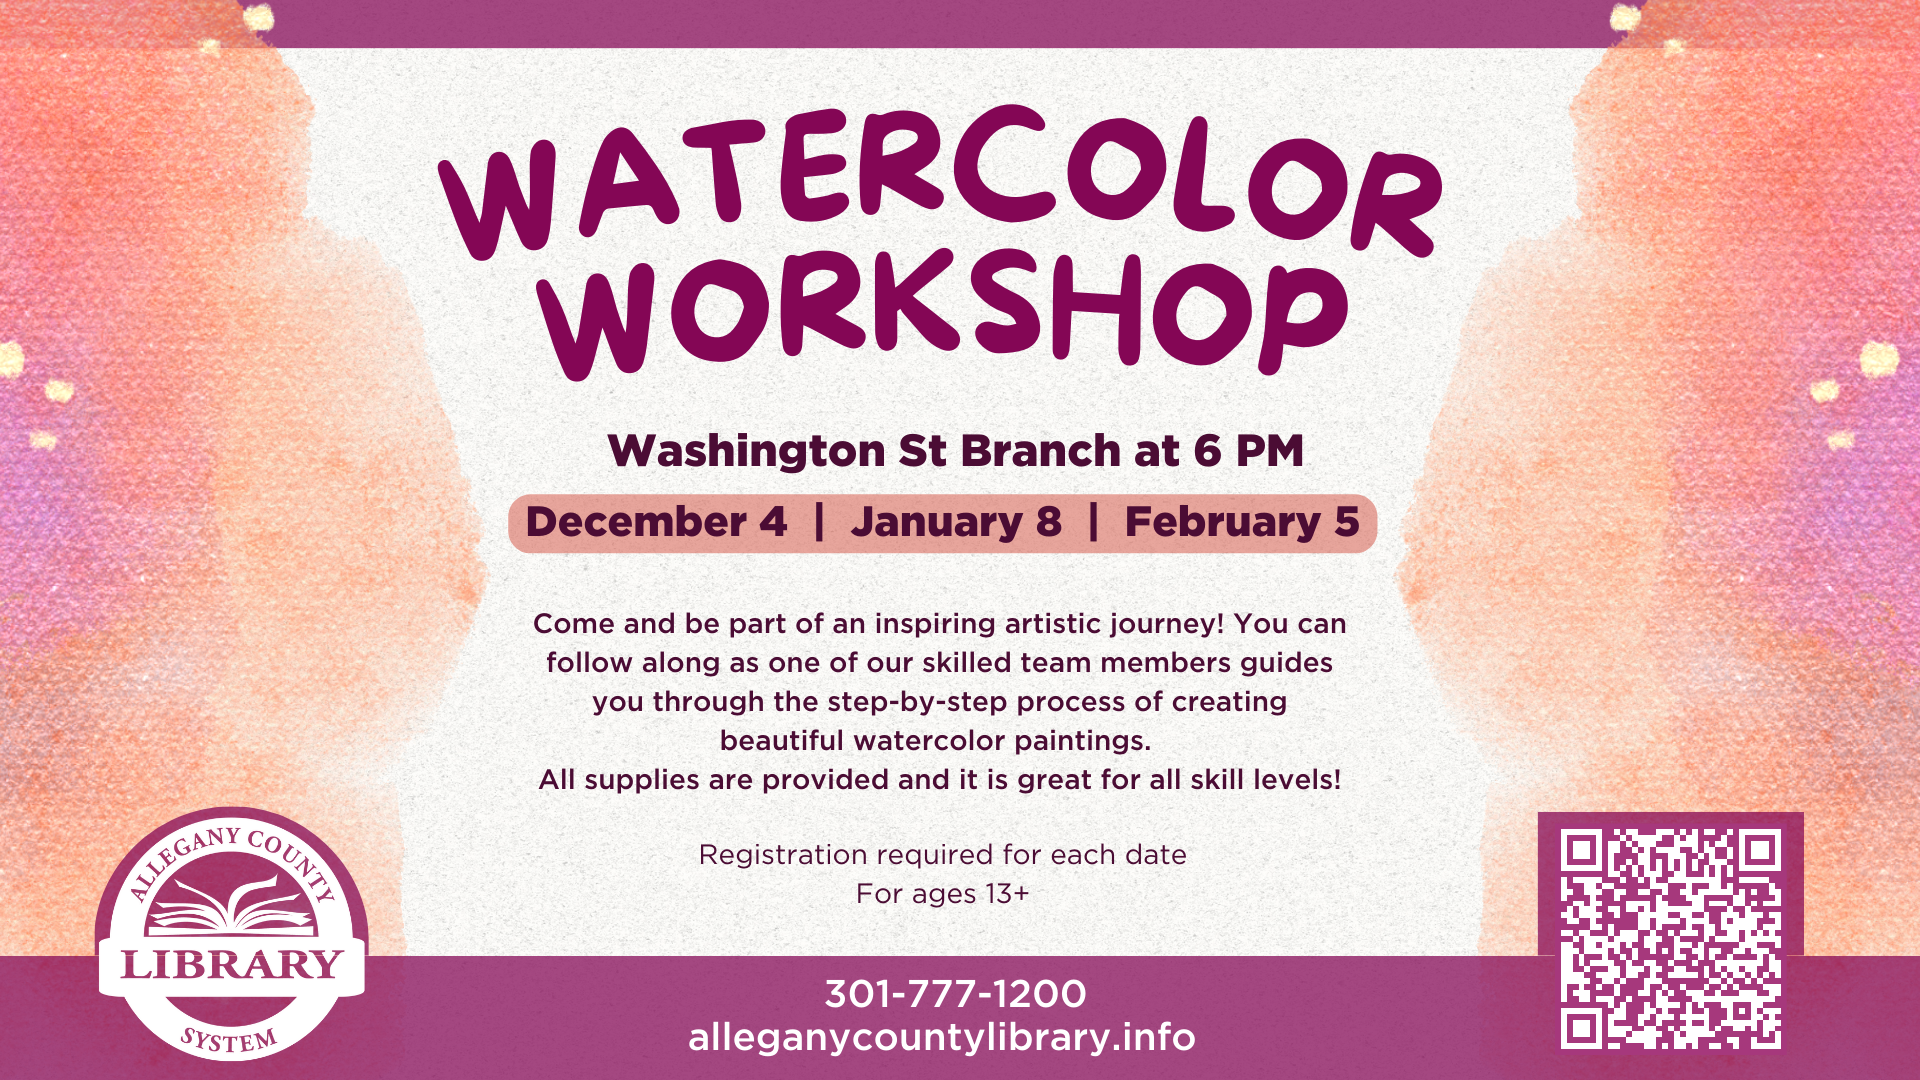 Watercolor Workshop details